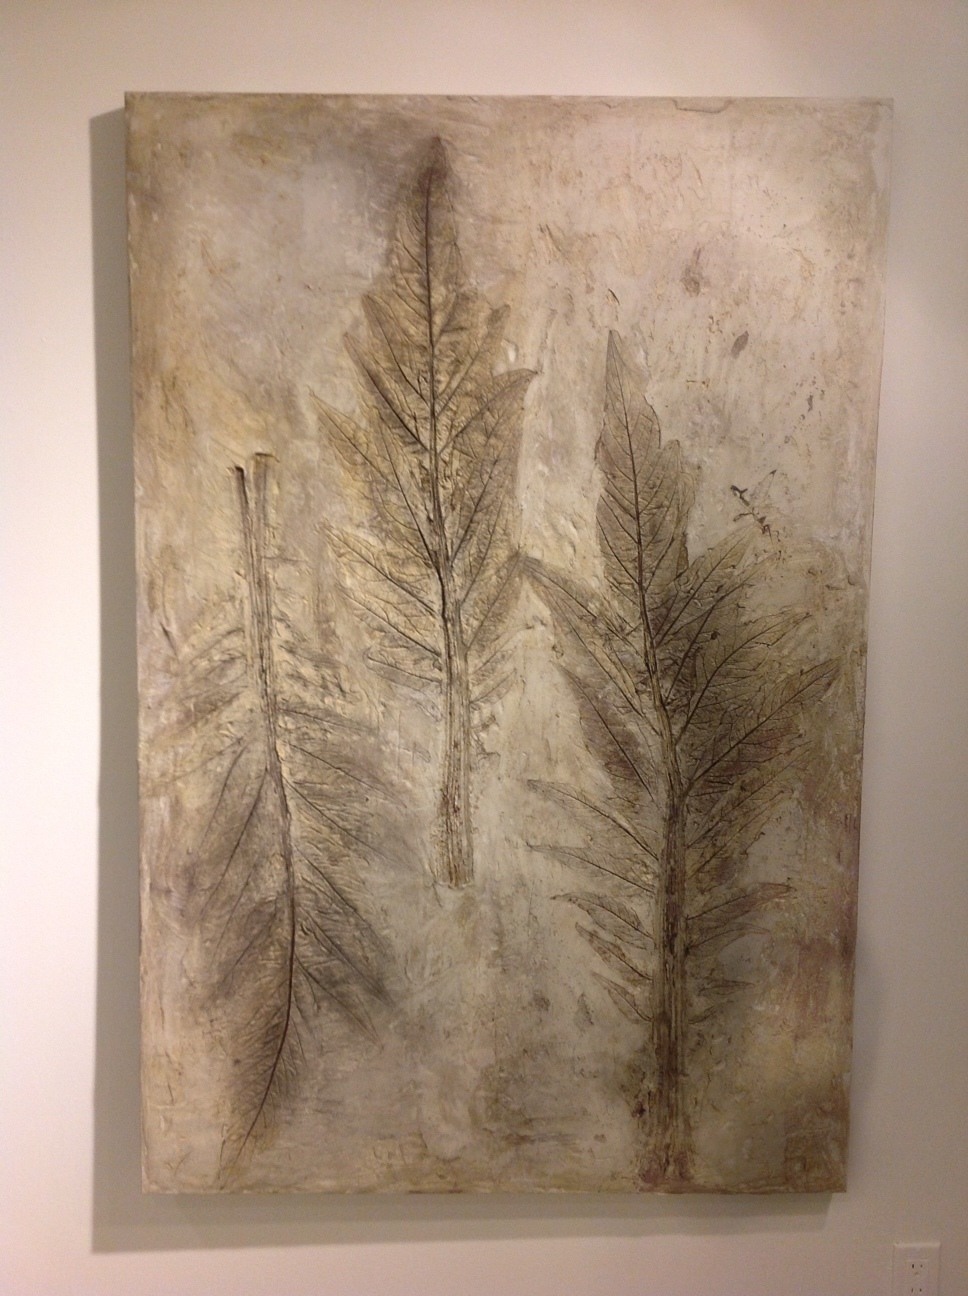 concrete panel with three vertical artichoke leaf impressions